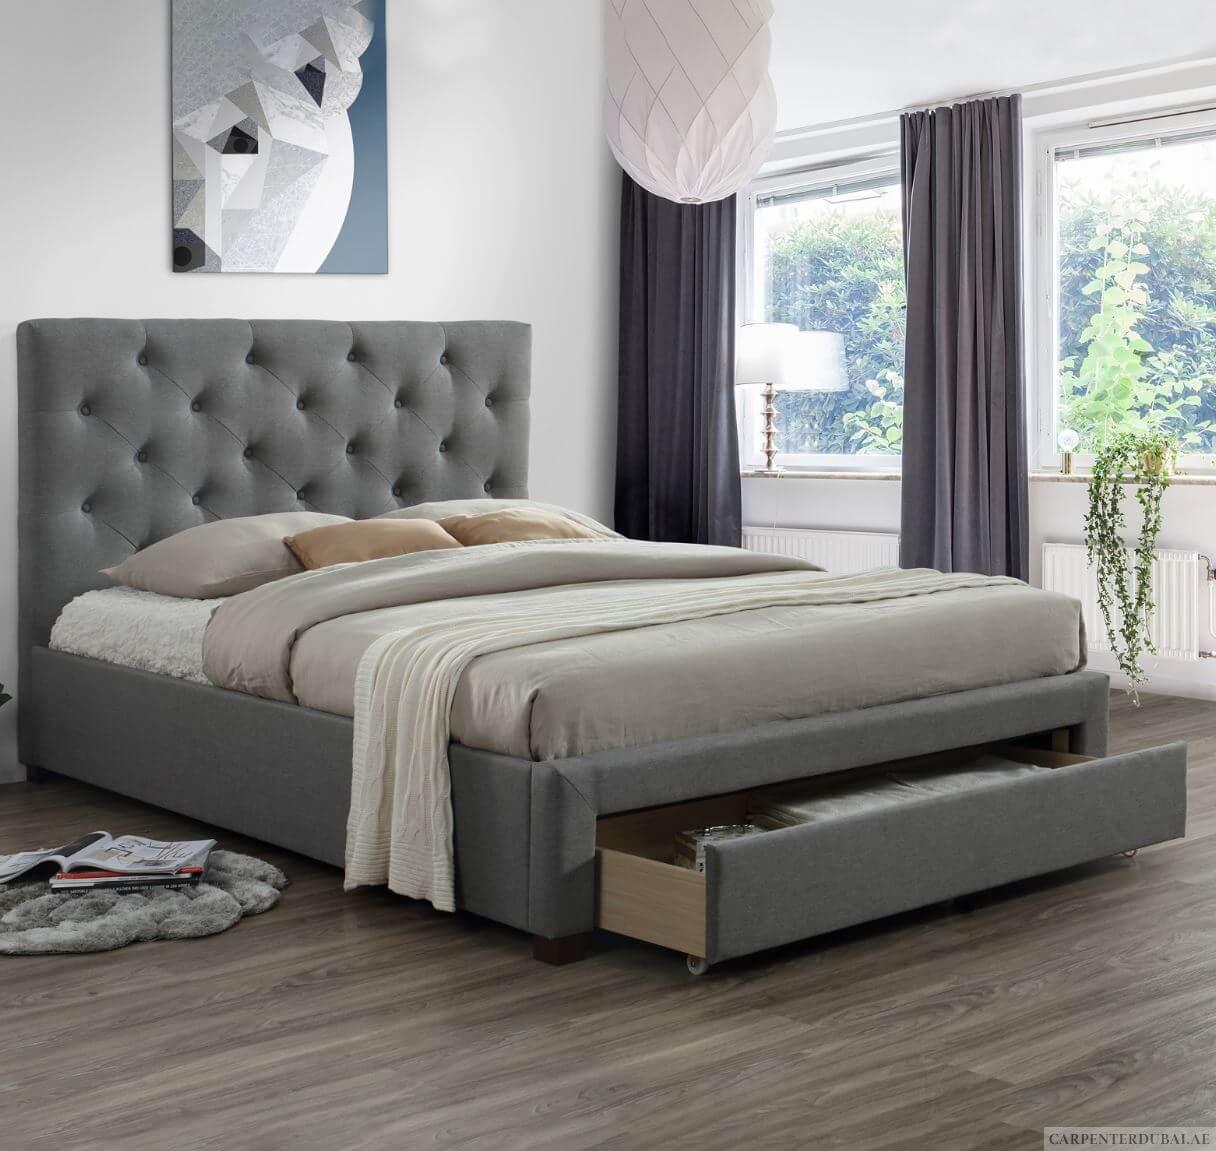 Best Custom Made Beds Dubai, Abu Dhabi & UAE - Lowest Price